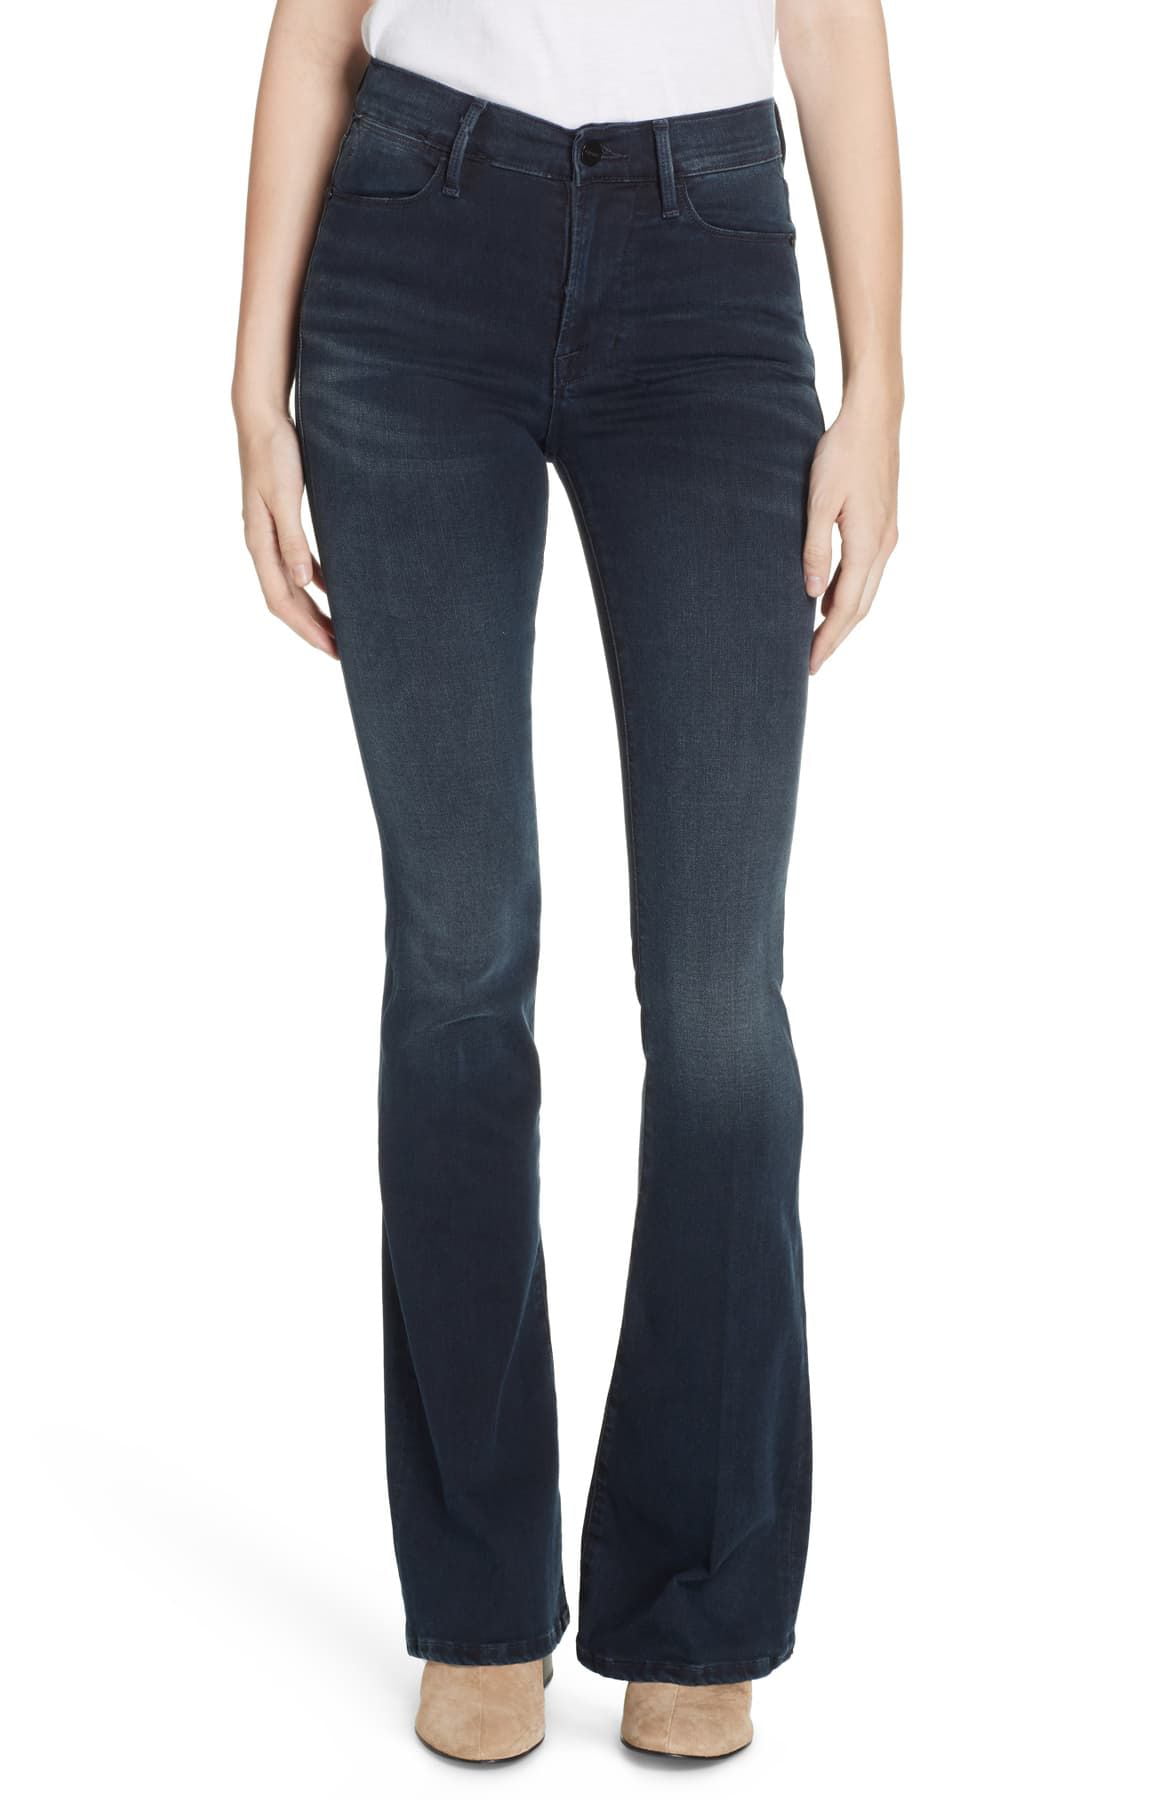 Denim Women's Jeans Moxie 29x34 Le High Rise Flare Leg 29 - Walmart.com ...